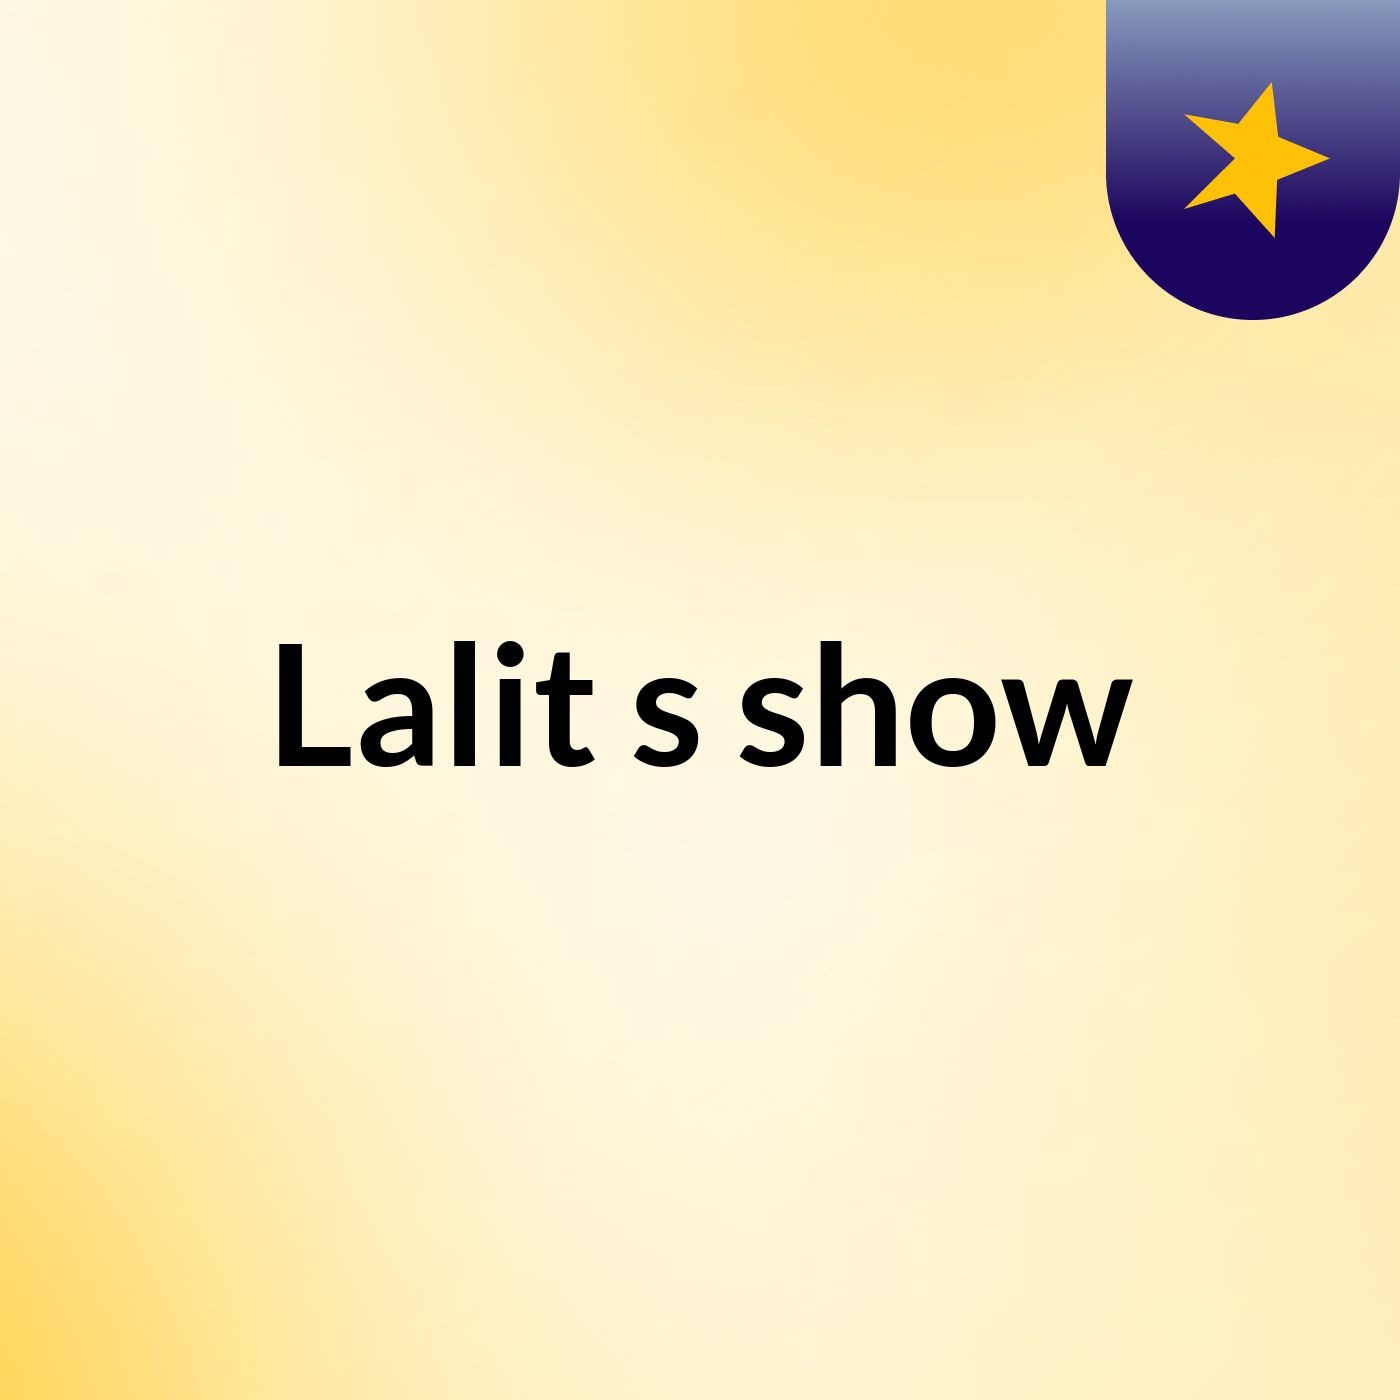 Lalit's show